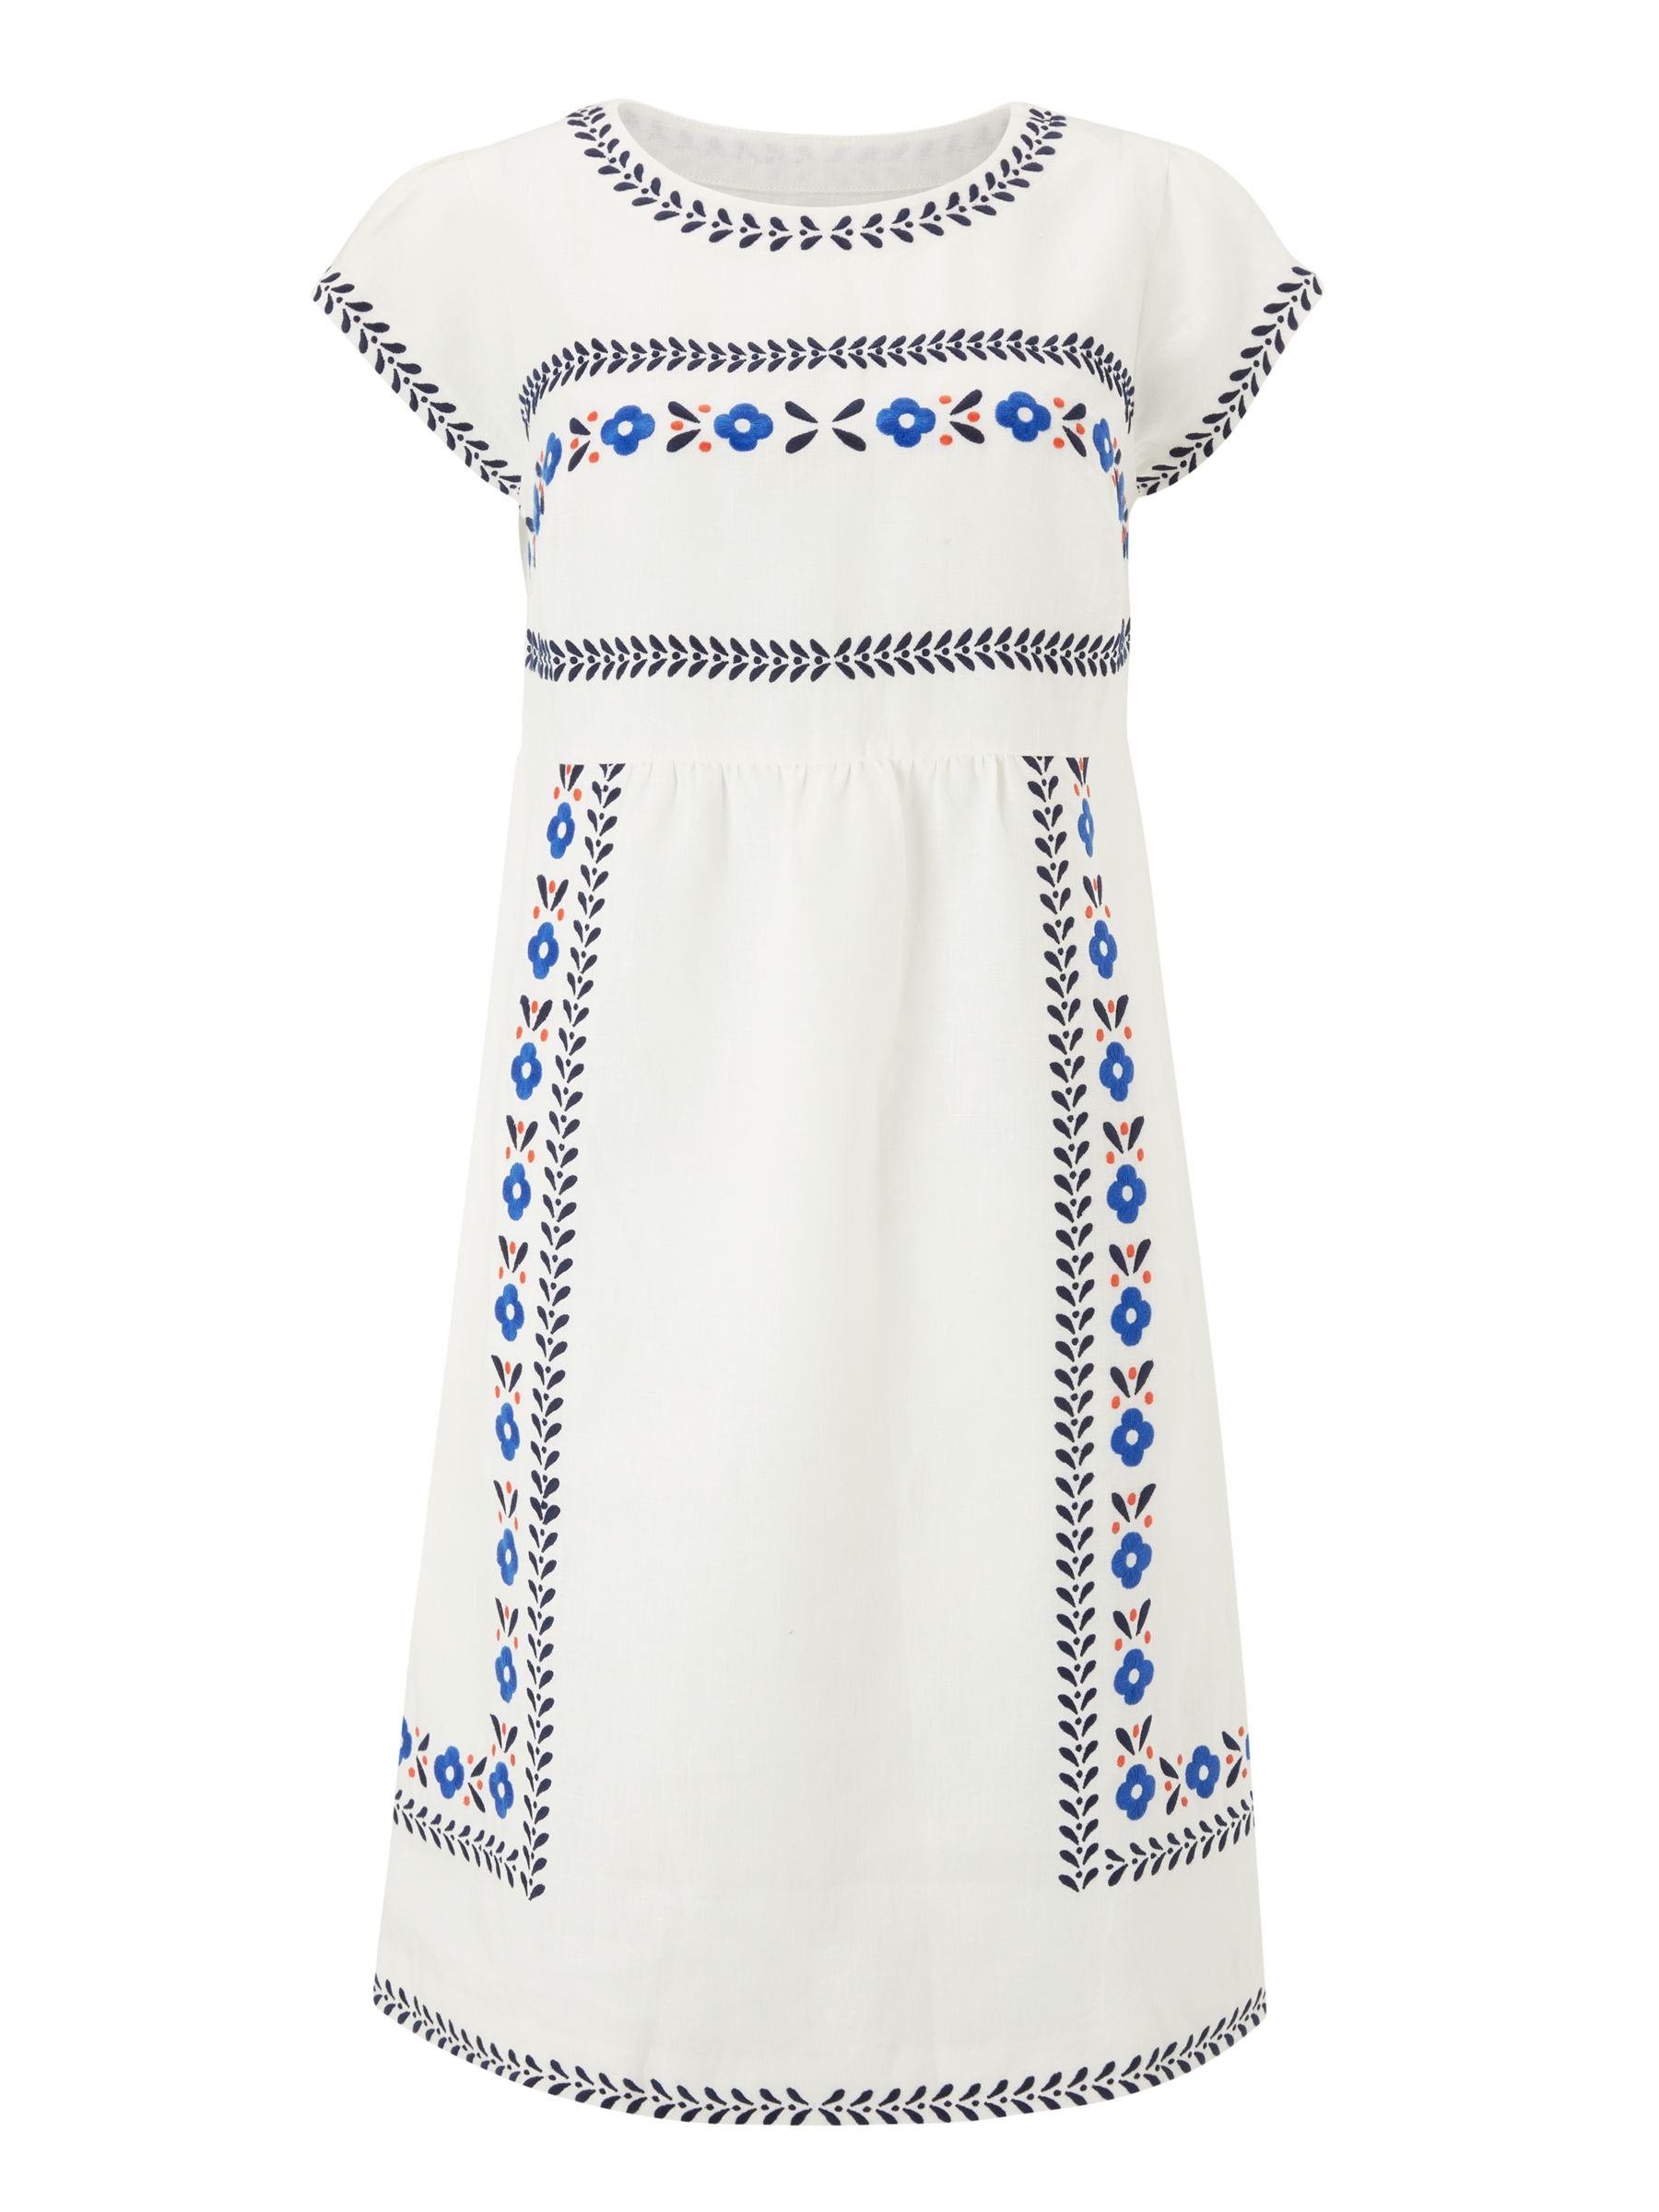 Boden Dora Embroidered Dress, Ivory